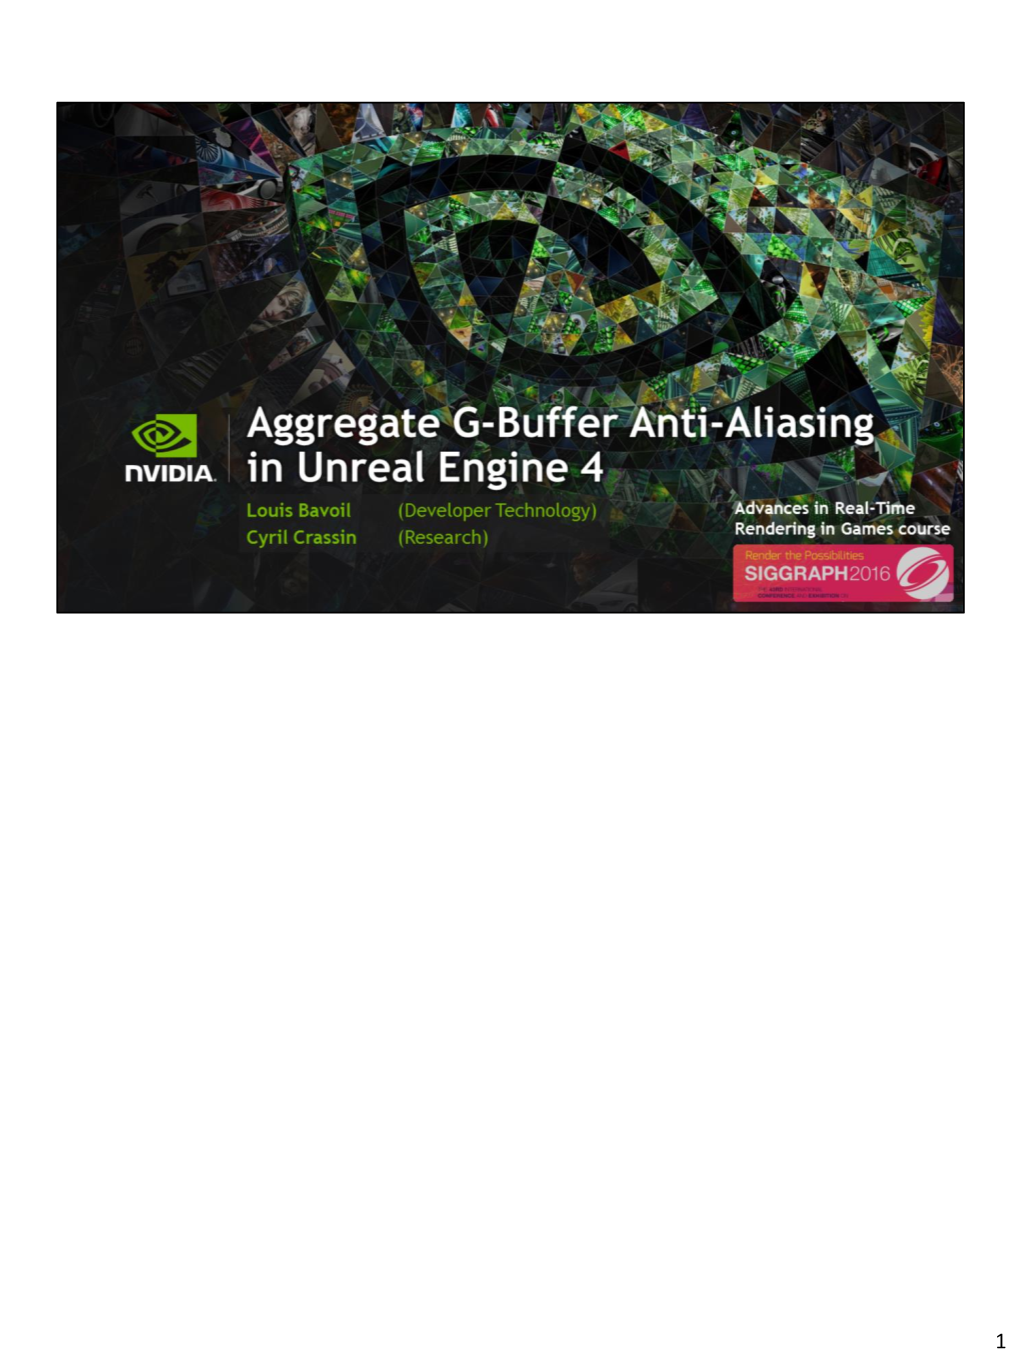 Aggregate G-Buffer Anti-Aliasing in Unreal Engine 4